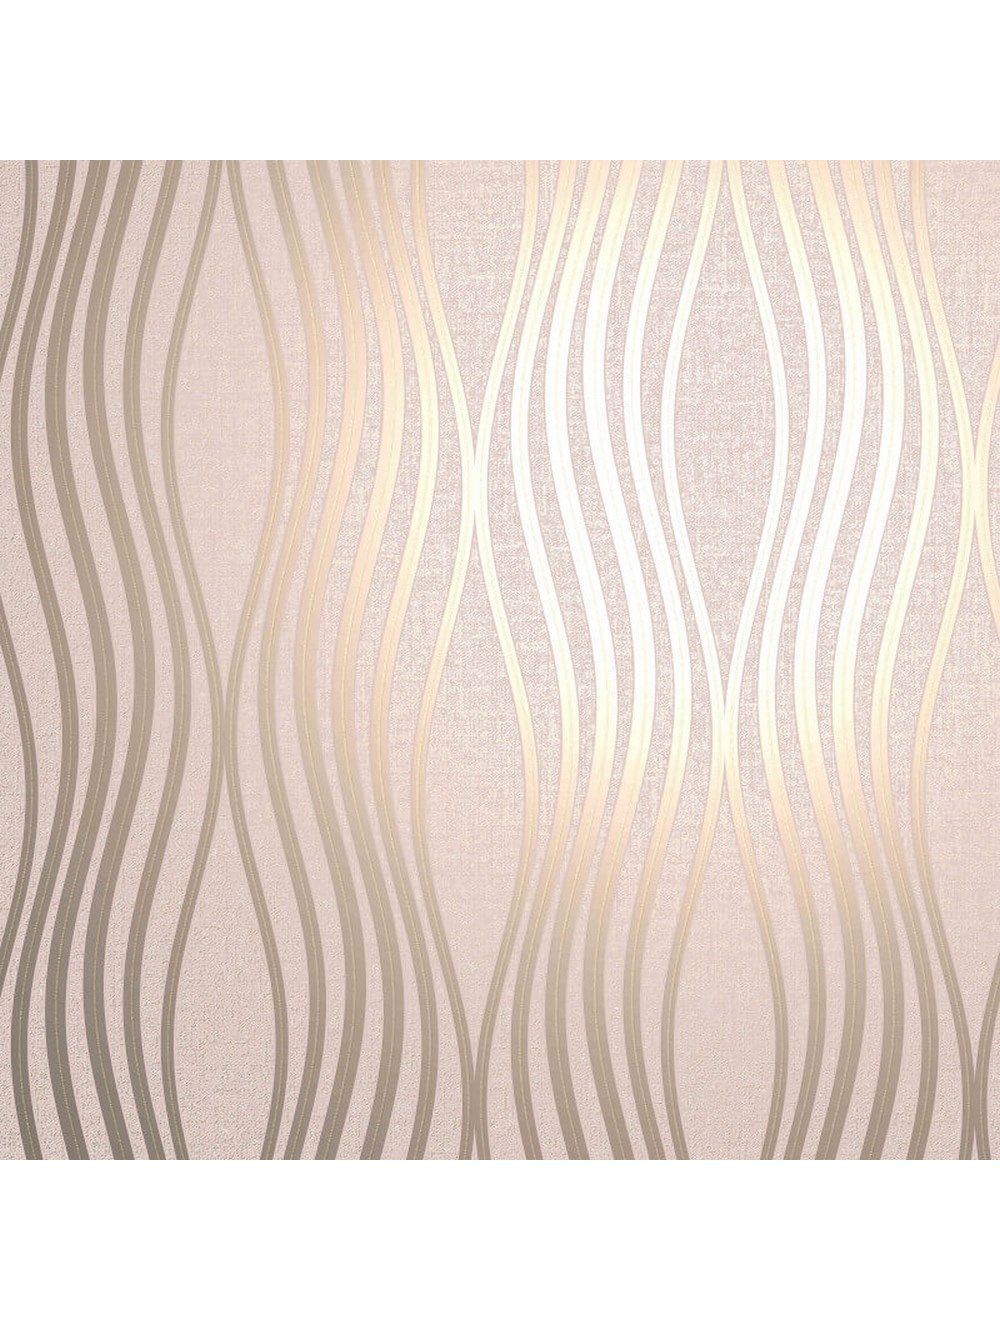 Fine Decor Quartz Wave Blush Wallpaper FD42685 - DecorSave Wallpapers